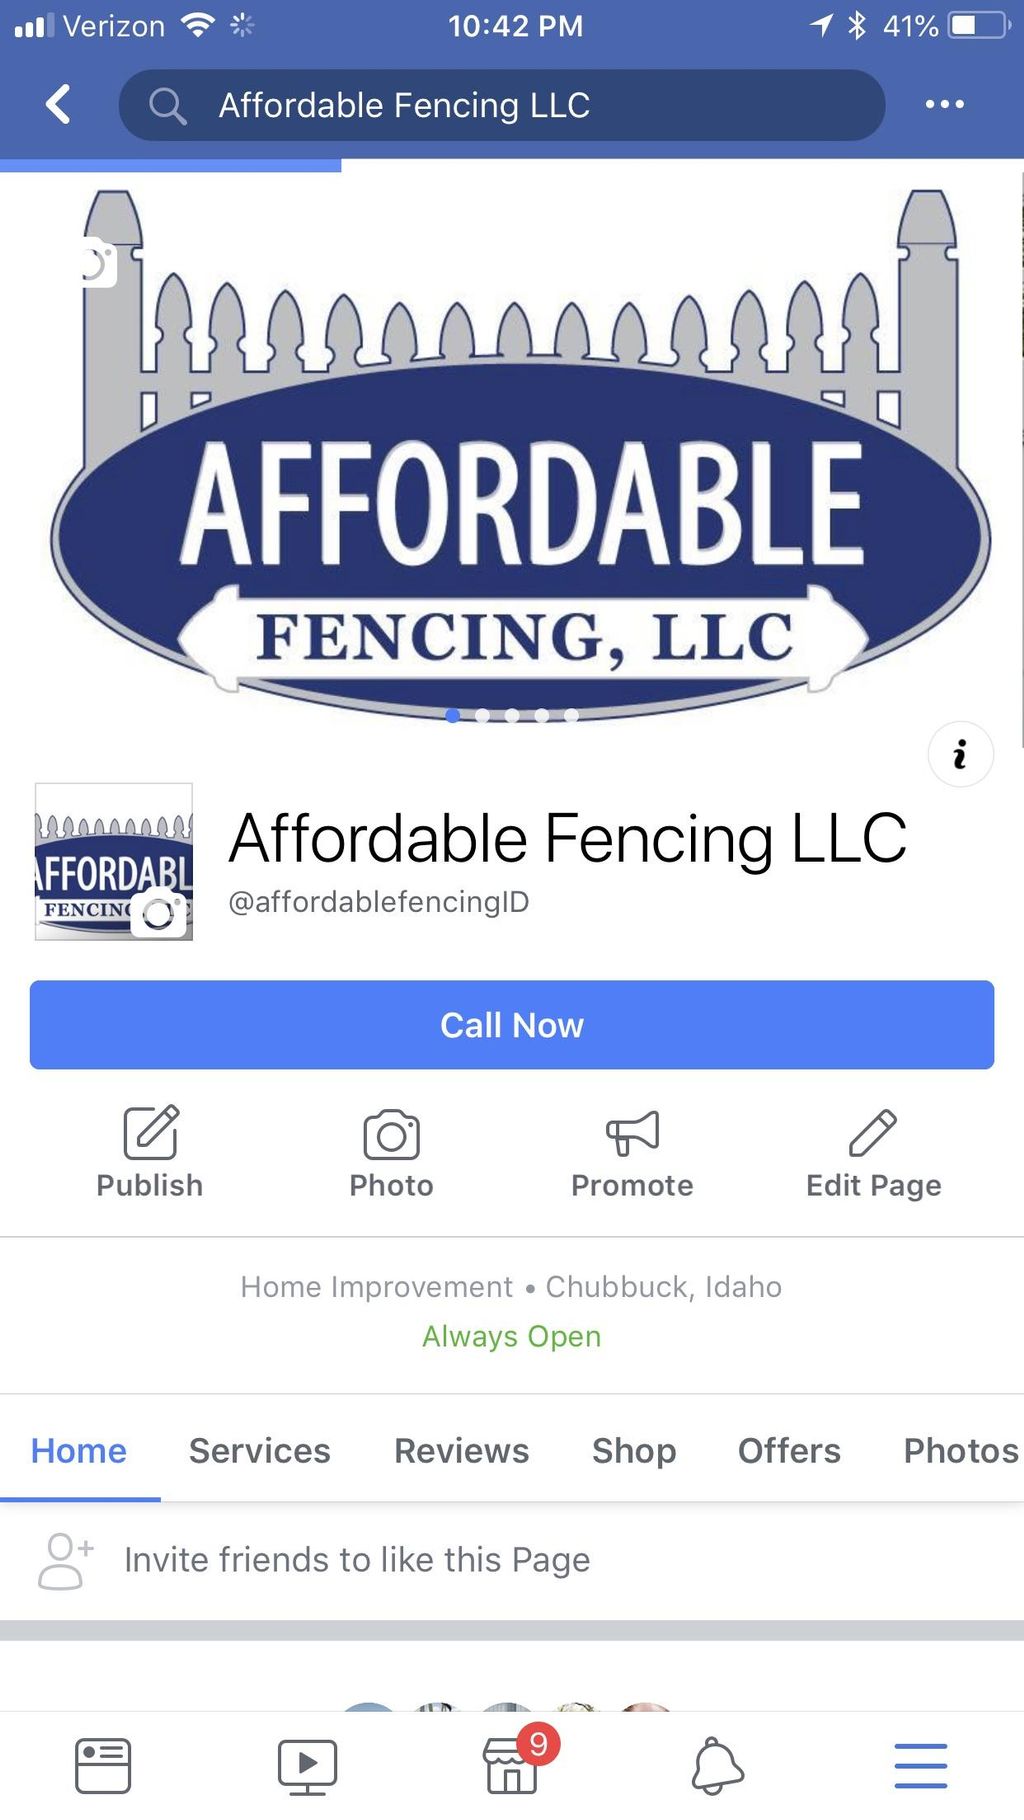 Affordable Fencing